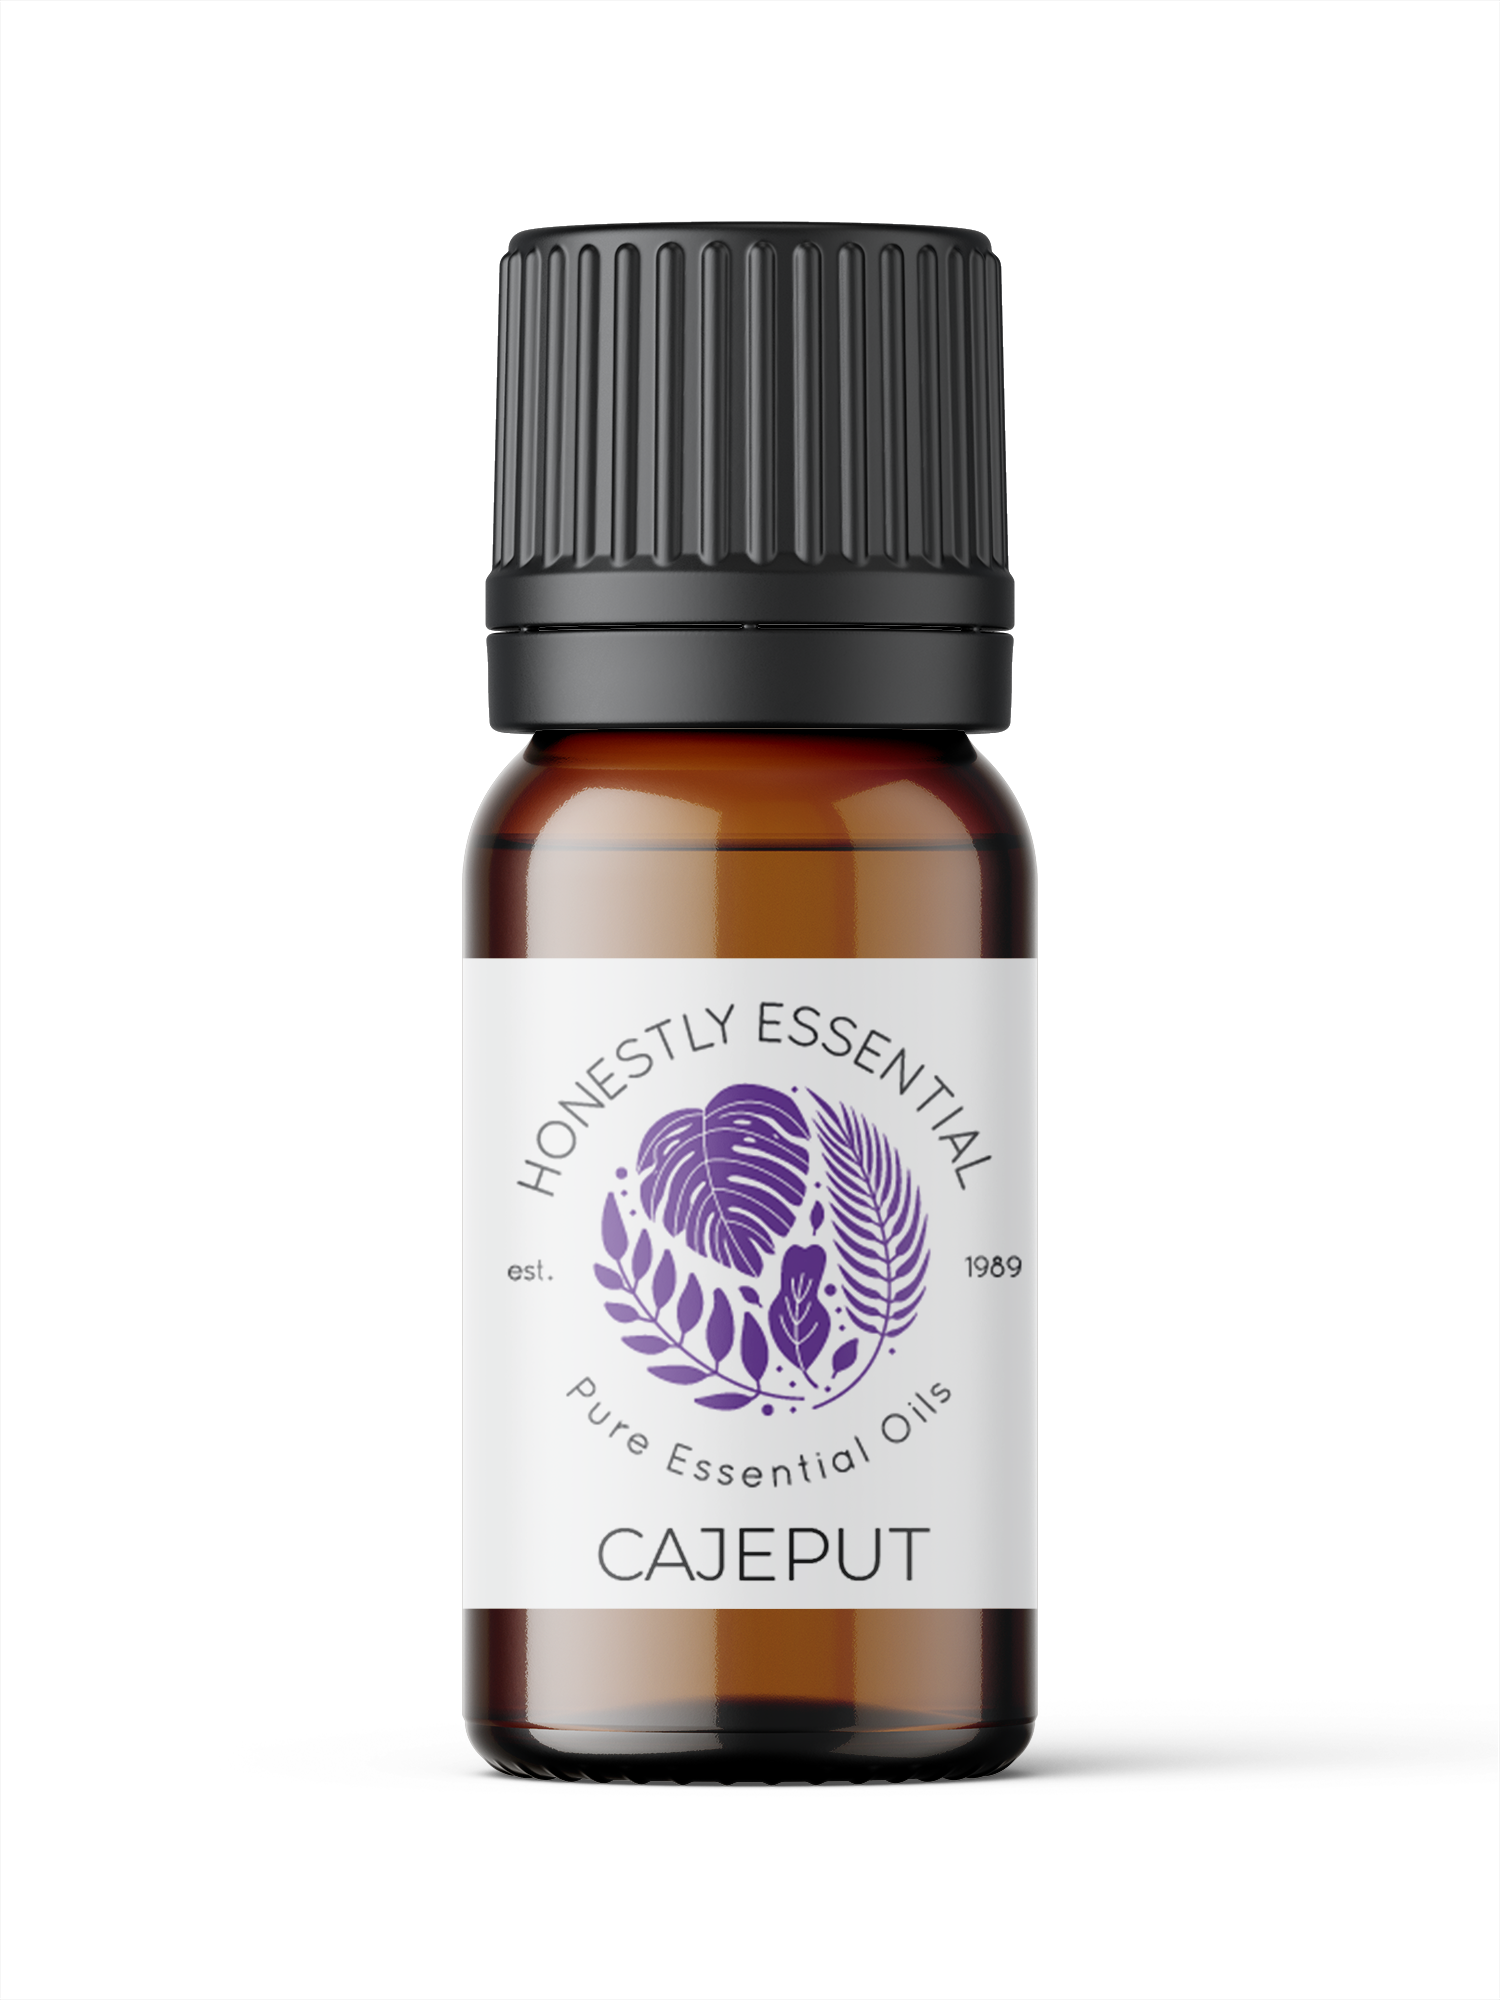 Cajeput Essential Oil - Essential Oils | Honestly Essential Oils immunity, tree, tree essential oil, trees